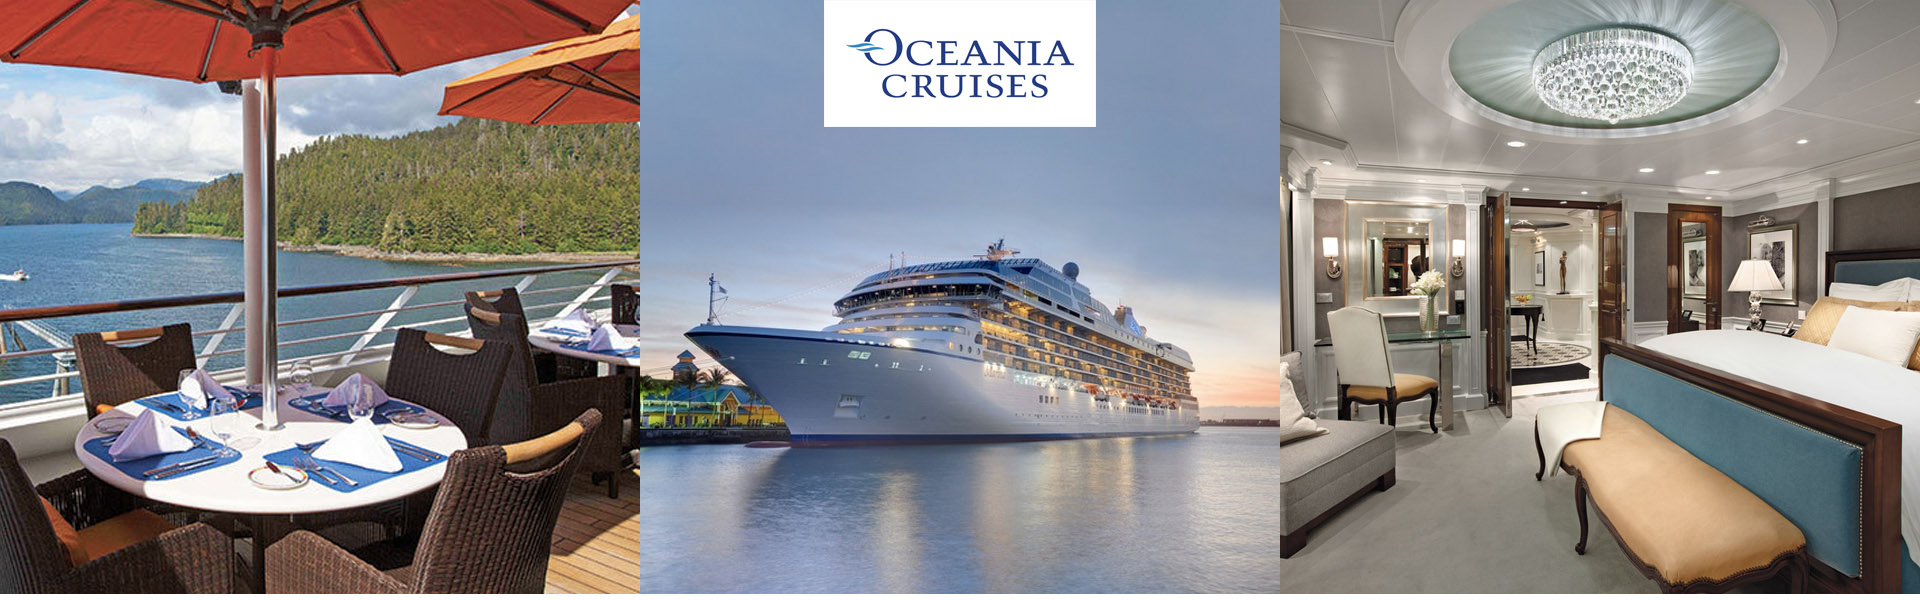 Oceania Cruise Reviews